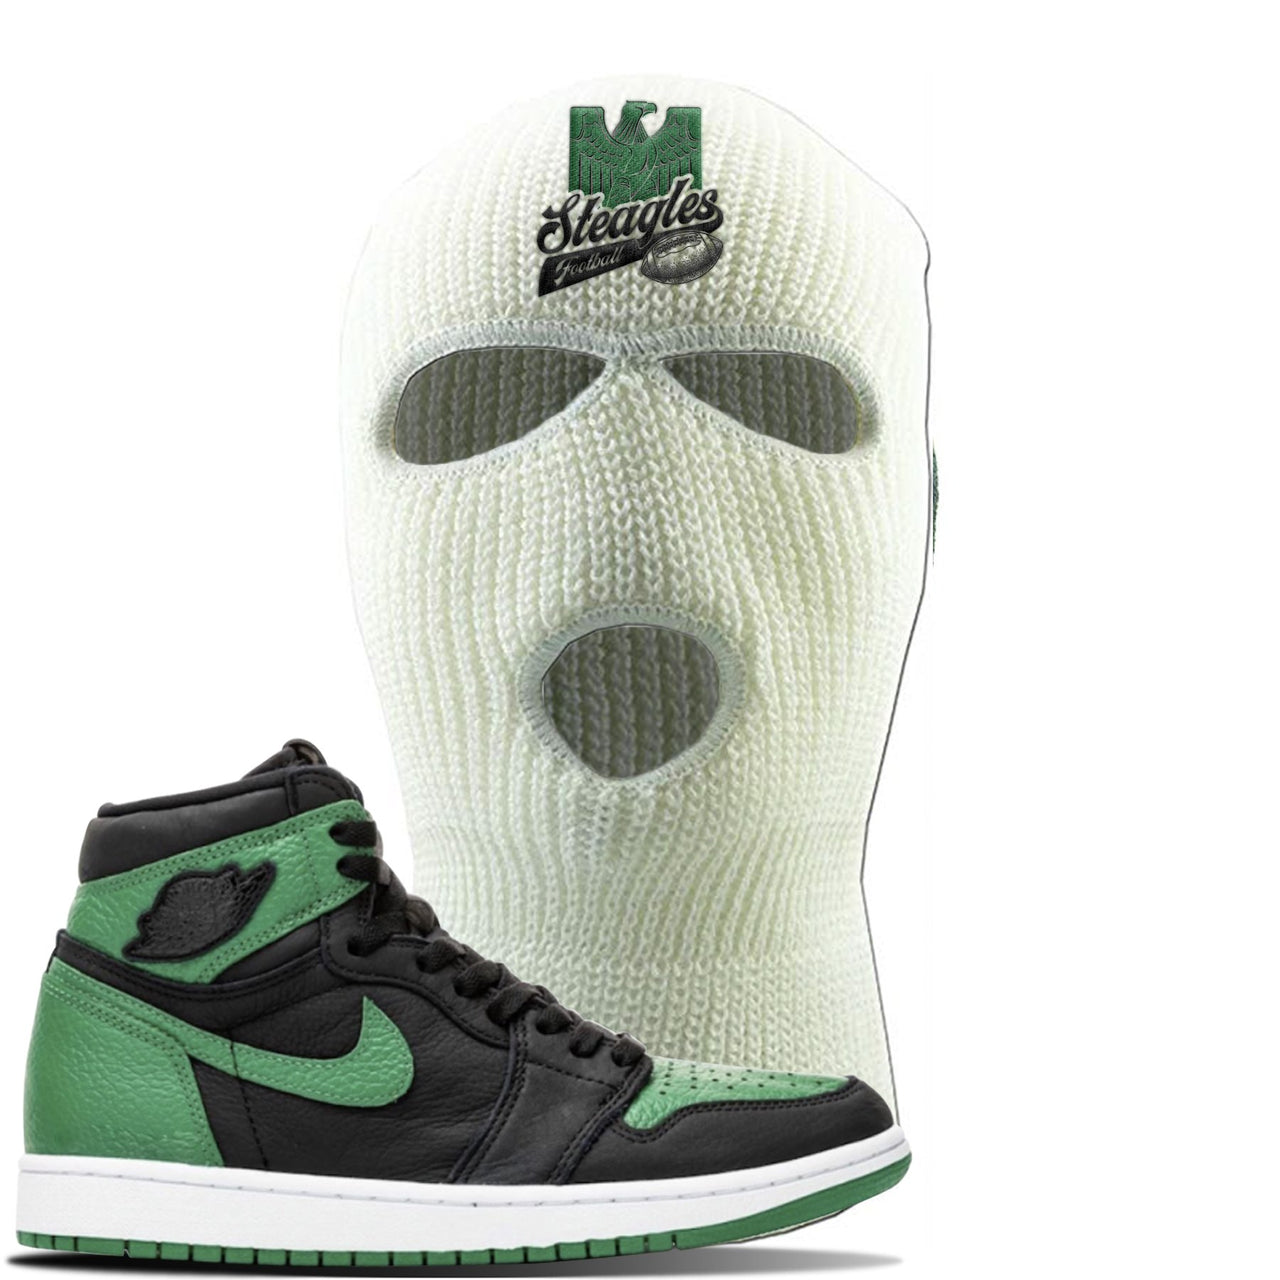 Jordan 1 Retro High OG Pine Green Gym Sneaker White Ski Mask | Hat to match Air Jordan 1 Retro High OG Pine Green Gym Shoes | Steagles